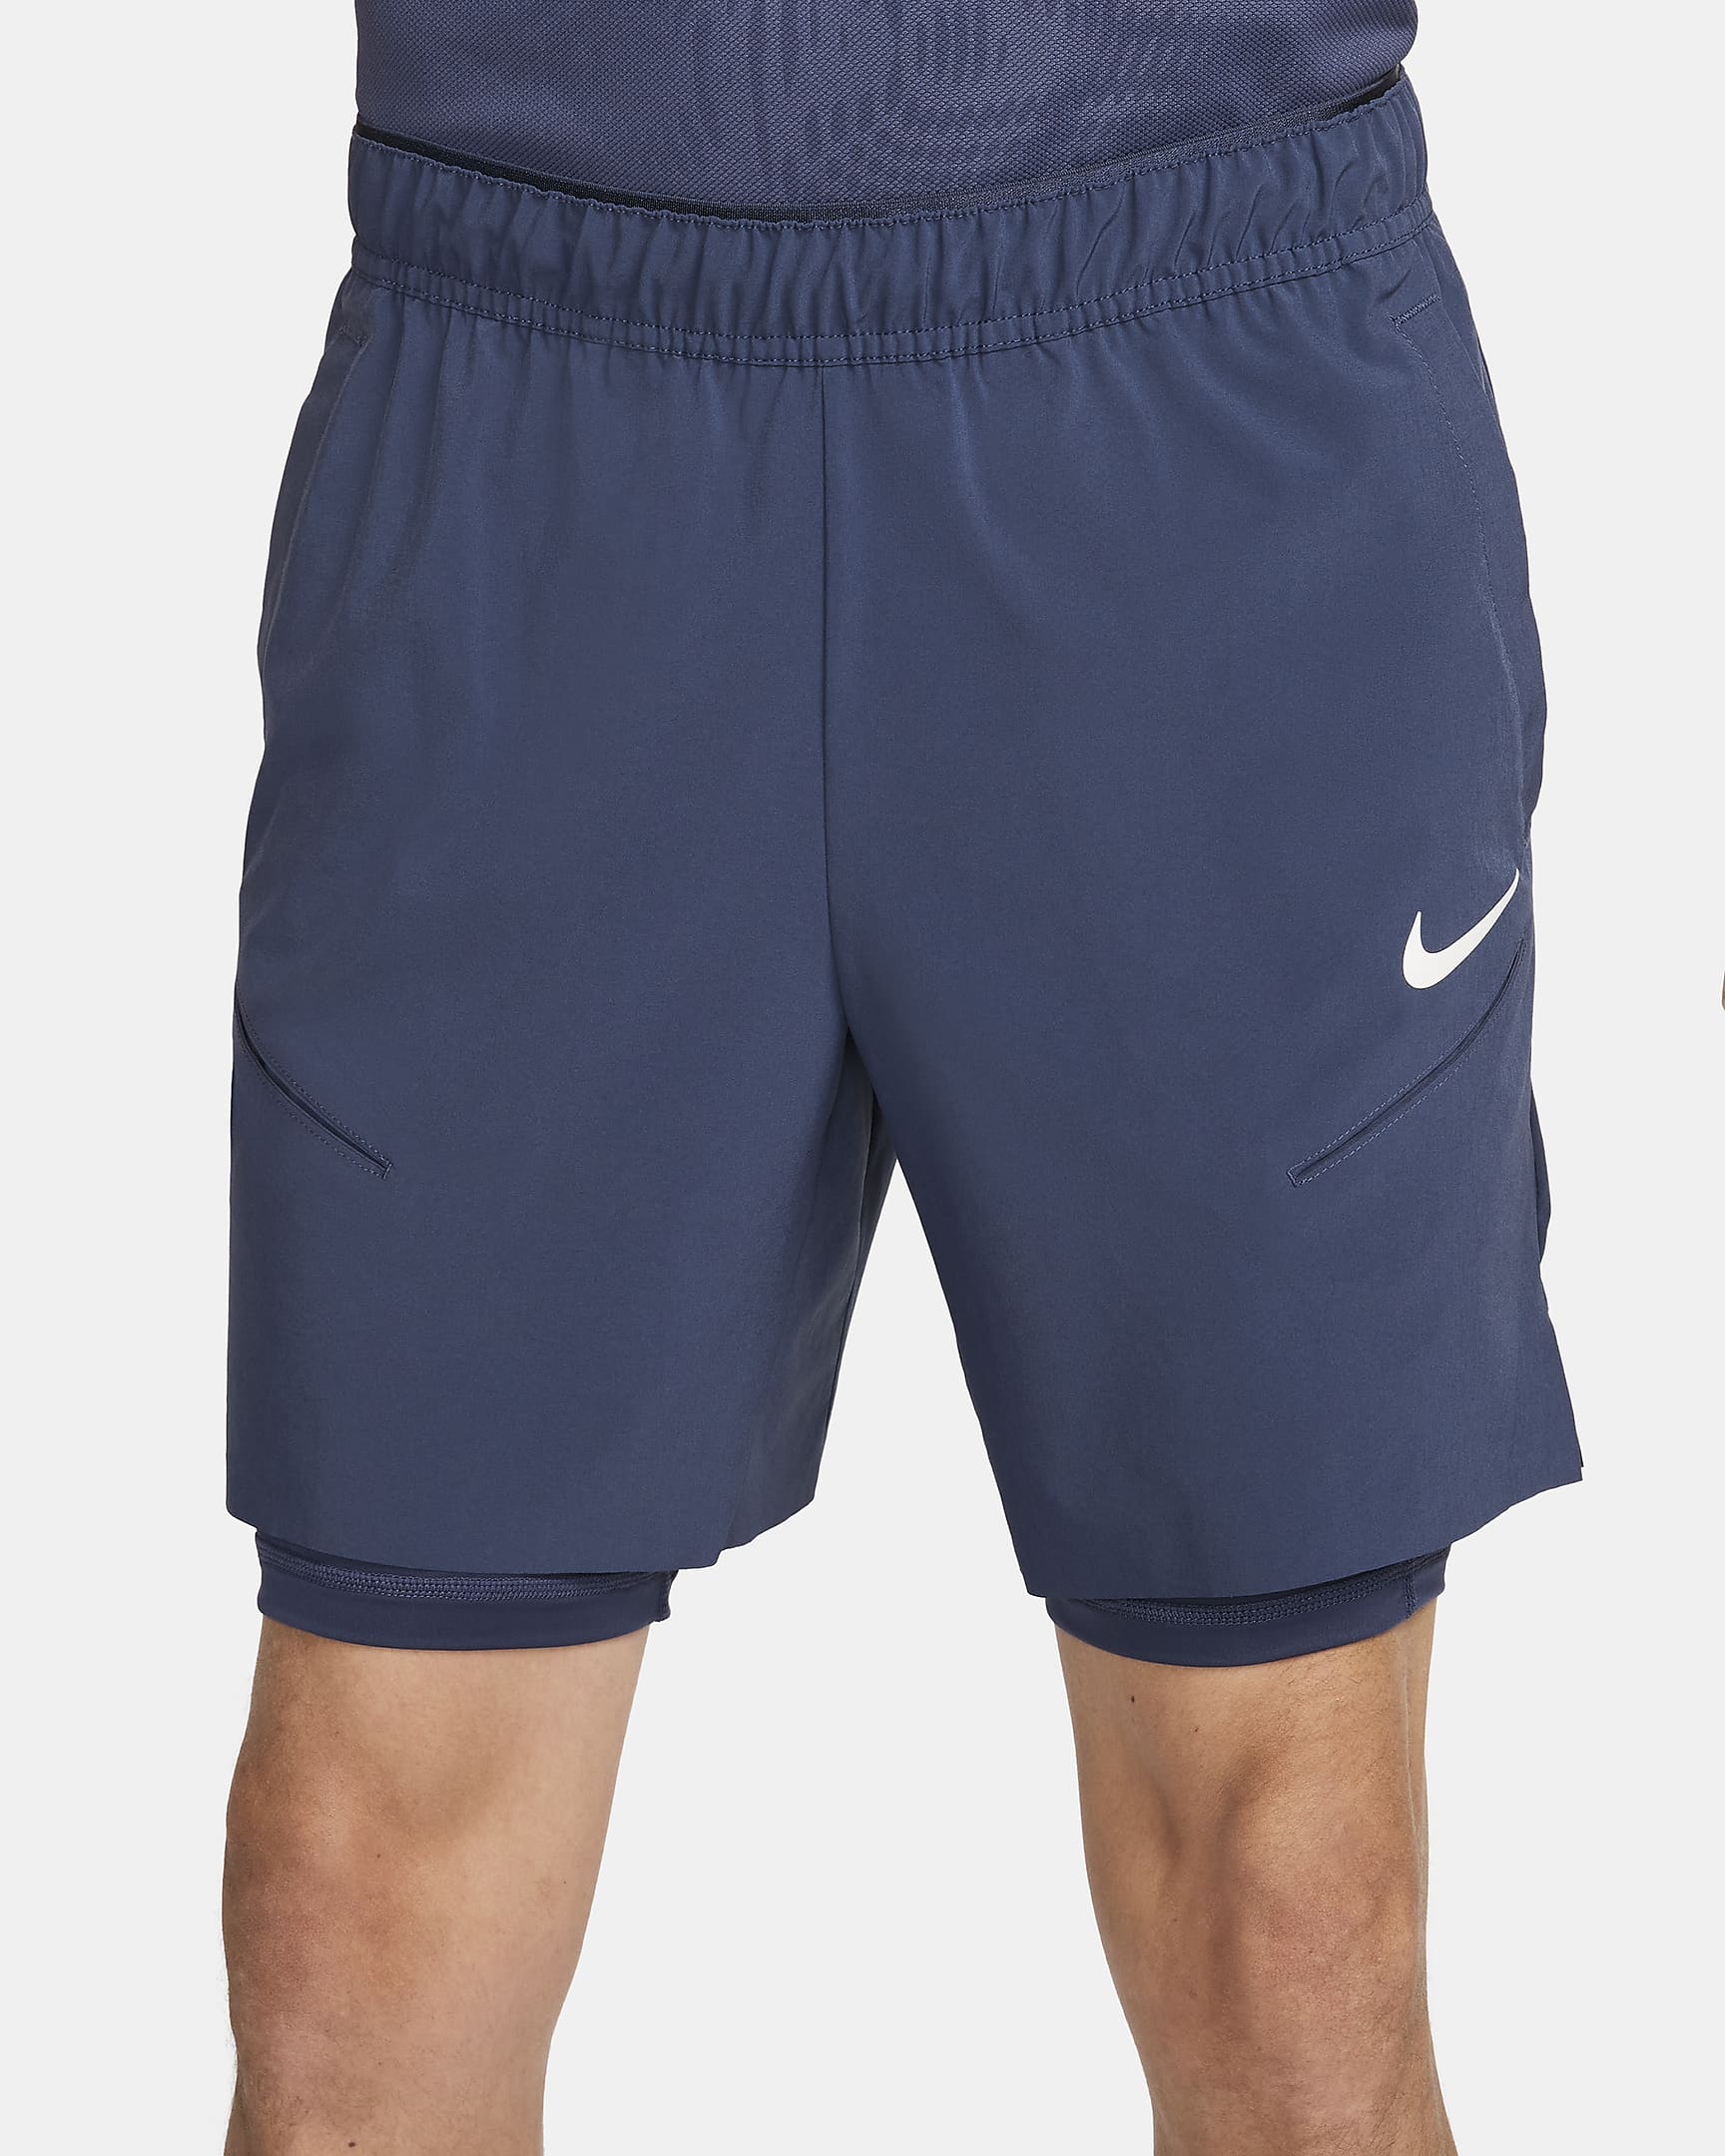 Nikecourt Slam Dri Fit Tennis Shorts Q6tnvt (9)